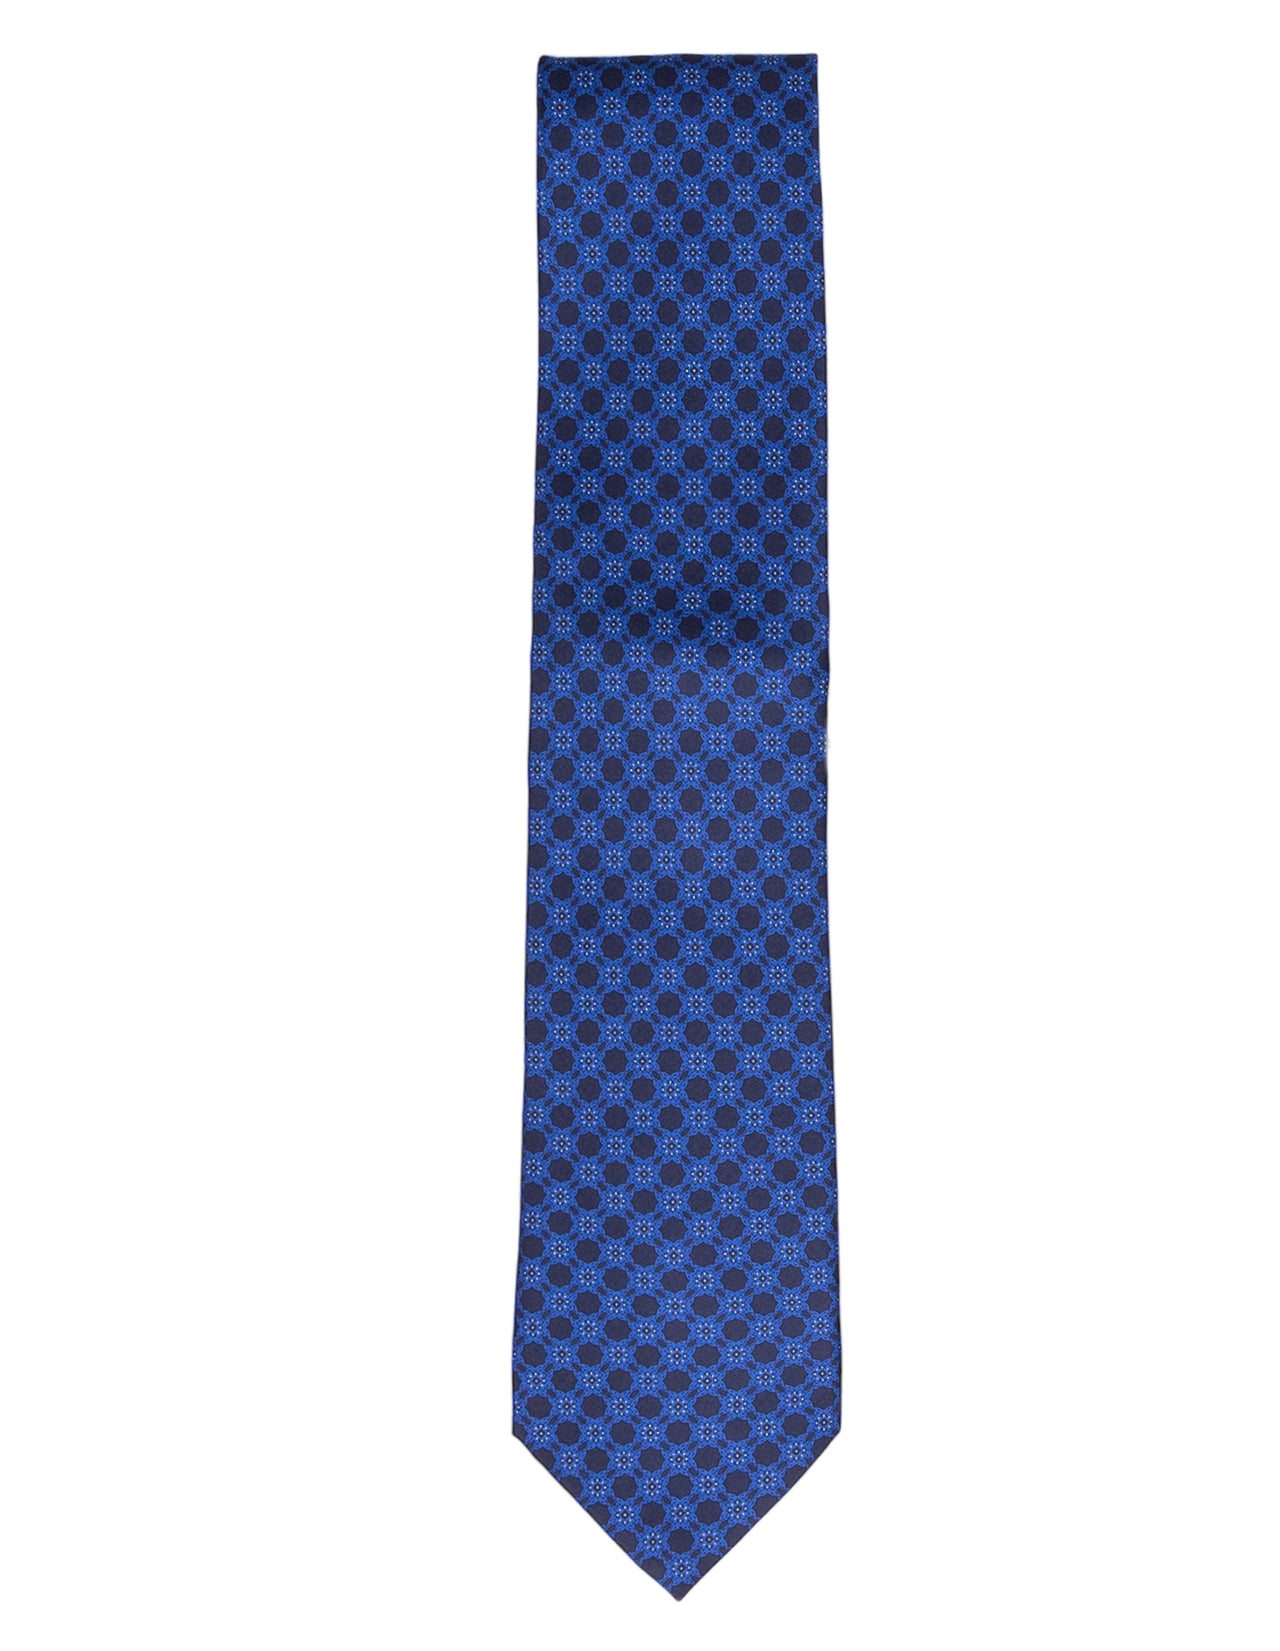 STEFANO RICCI Silk Tie & Pocket Square Set BLUE/NAVY